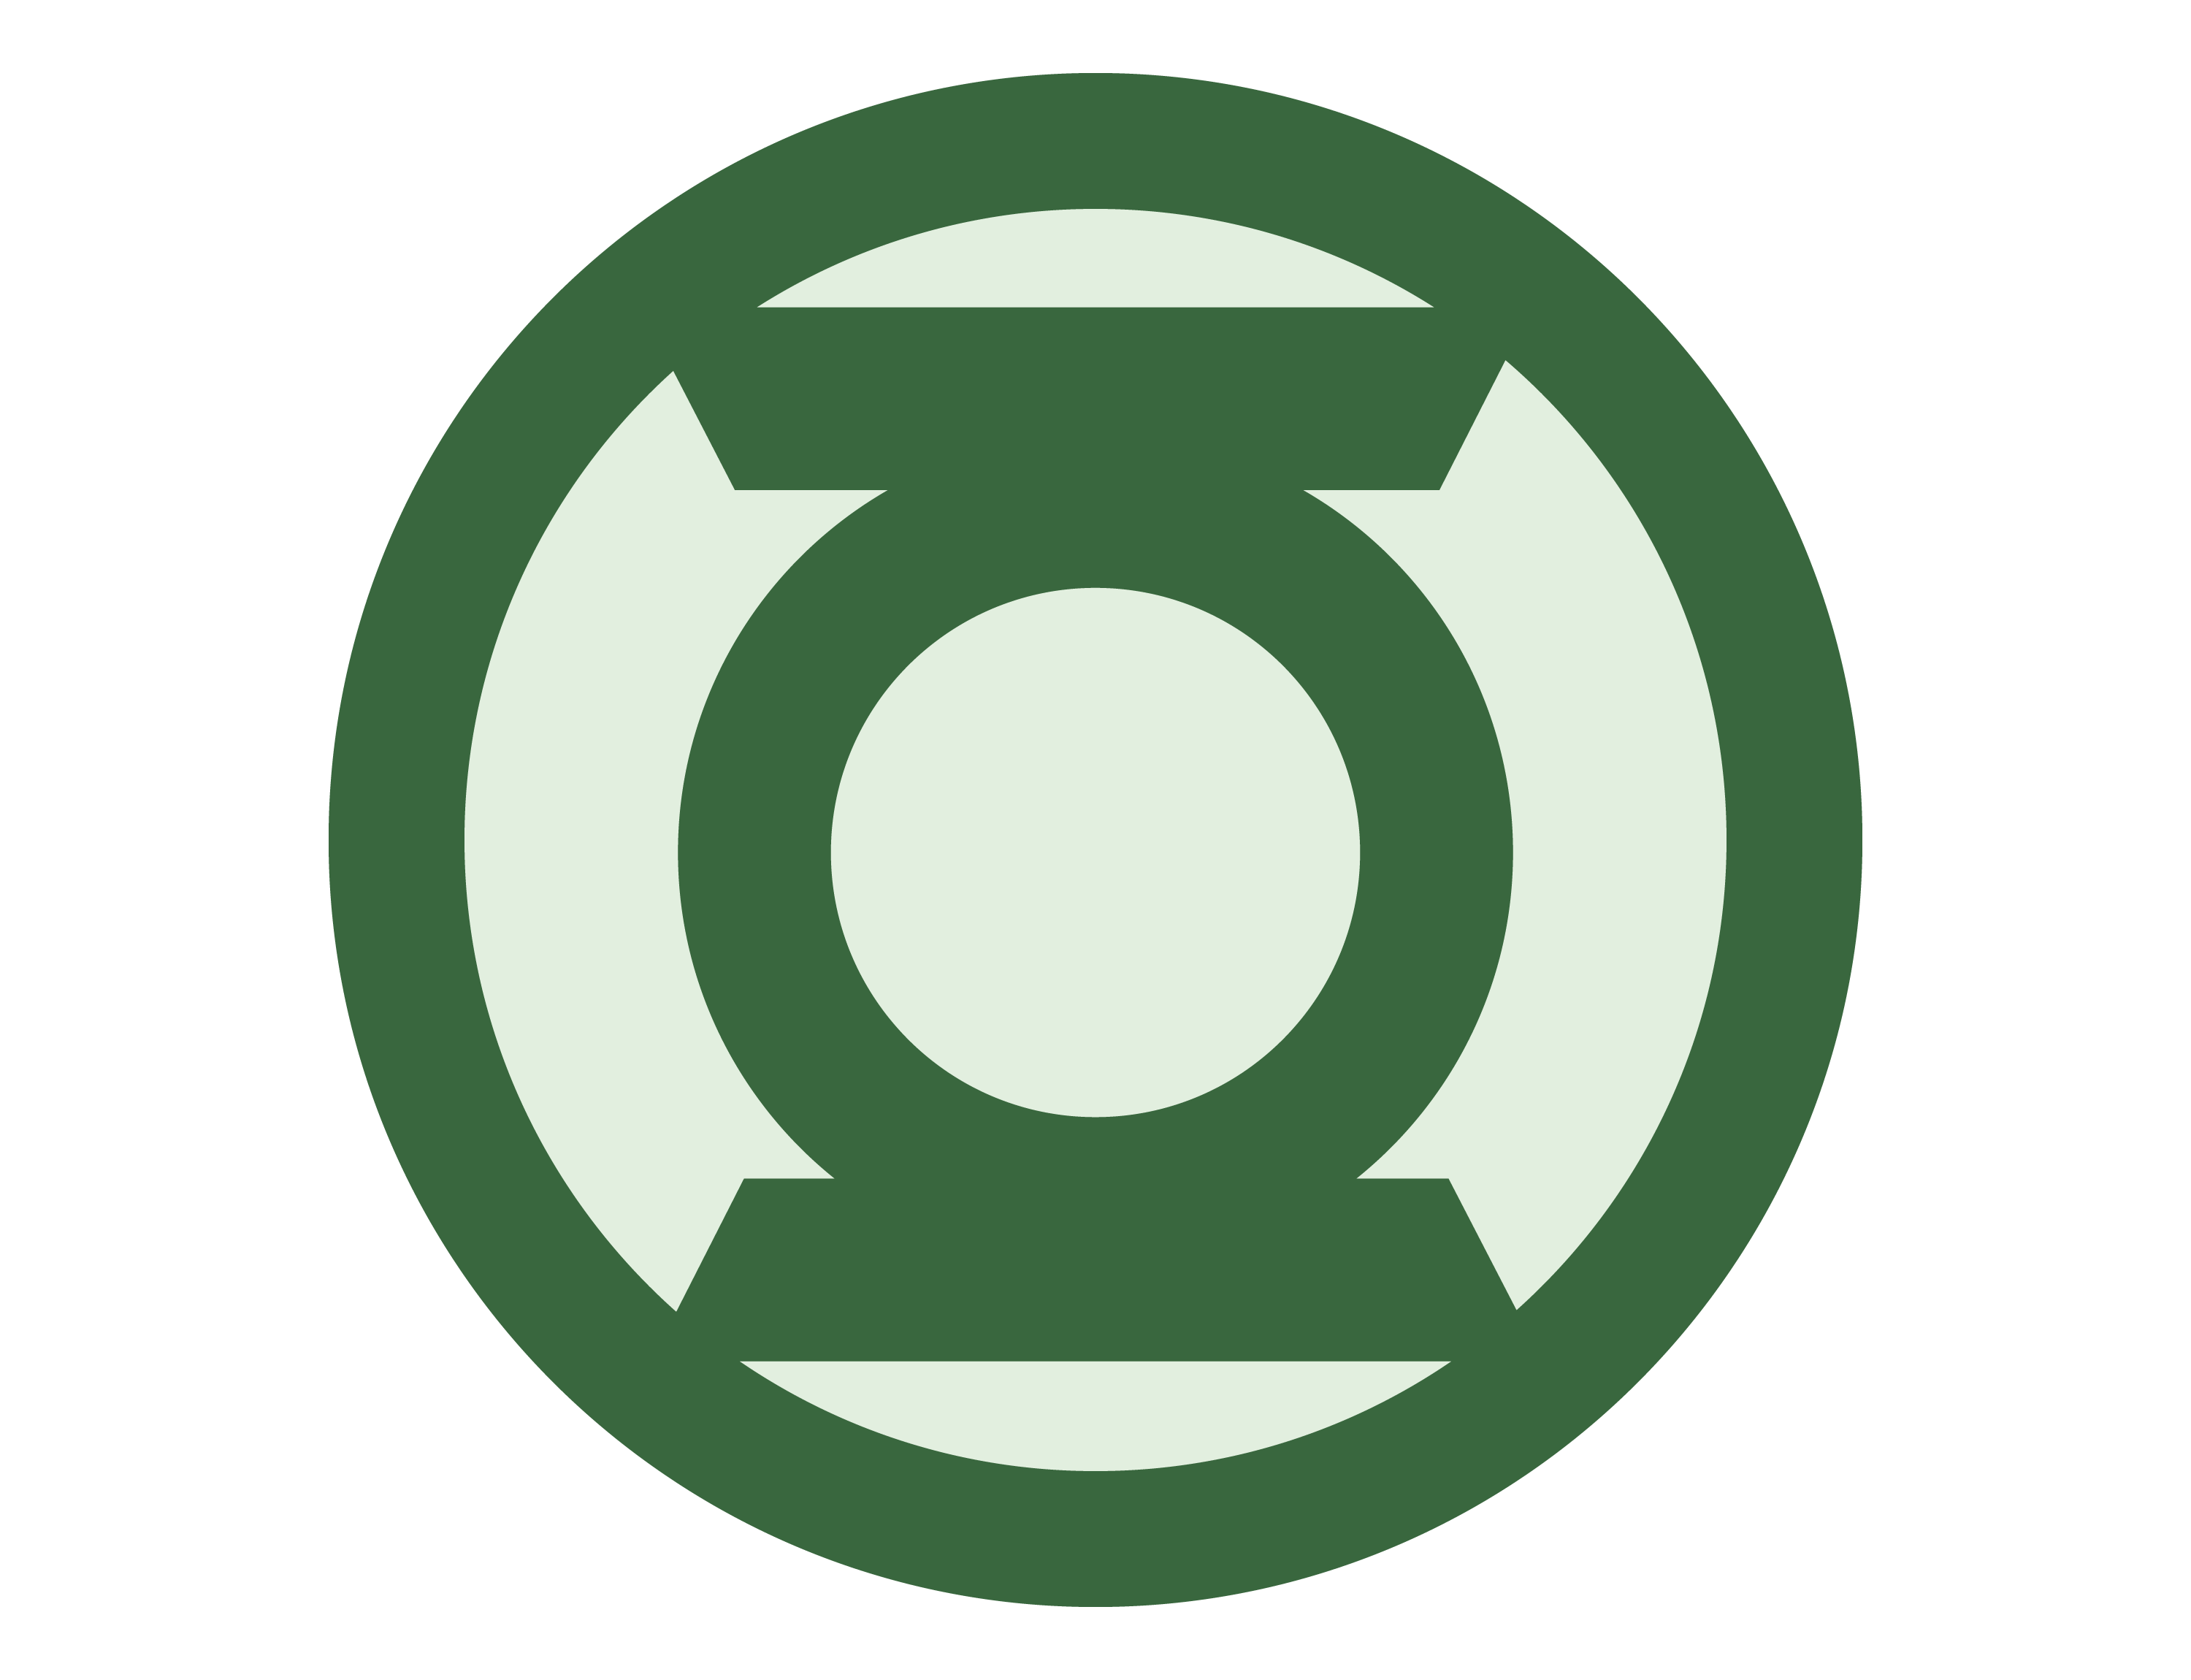 Green Lantern Symbol Logo - Green Lantern Logo, Green Lantern Symbol, Meaning, History and Evolution